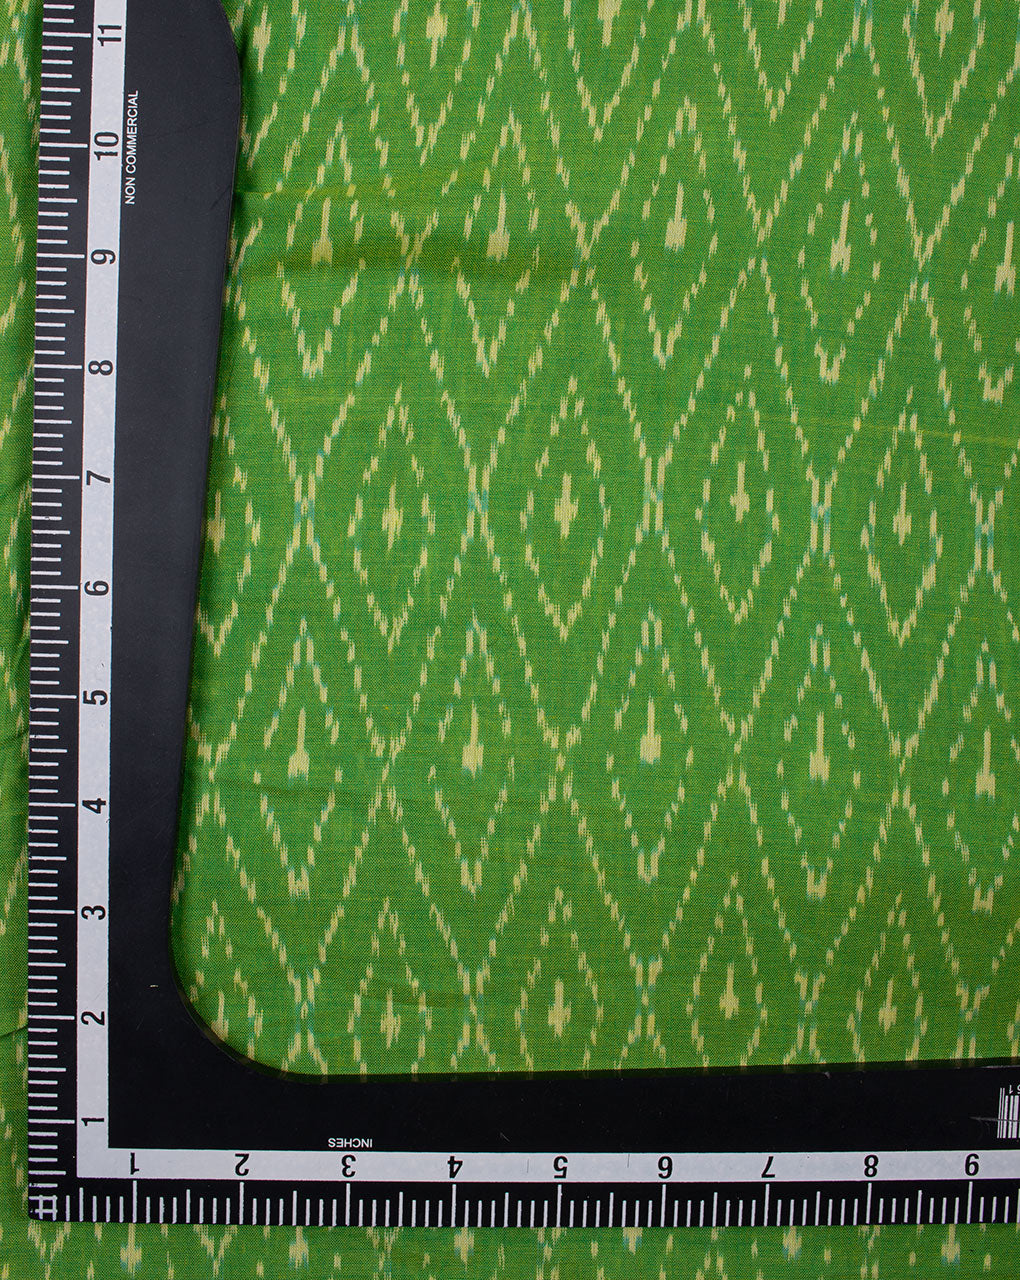 Green & Off-White Chevron Pattern Woven Mercerized Ikat Cotton Fabric - Fabriclore.com